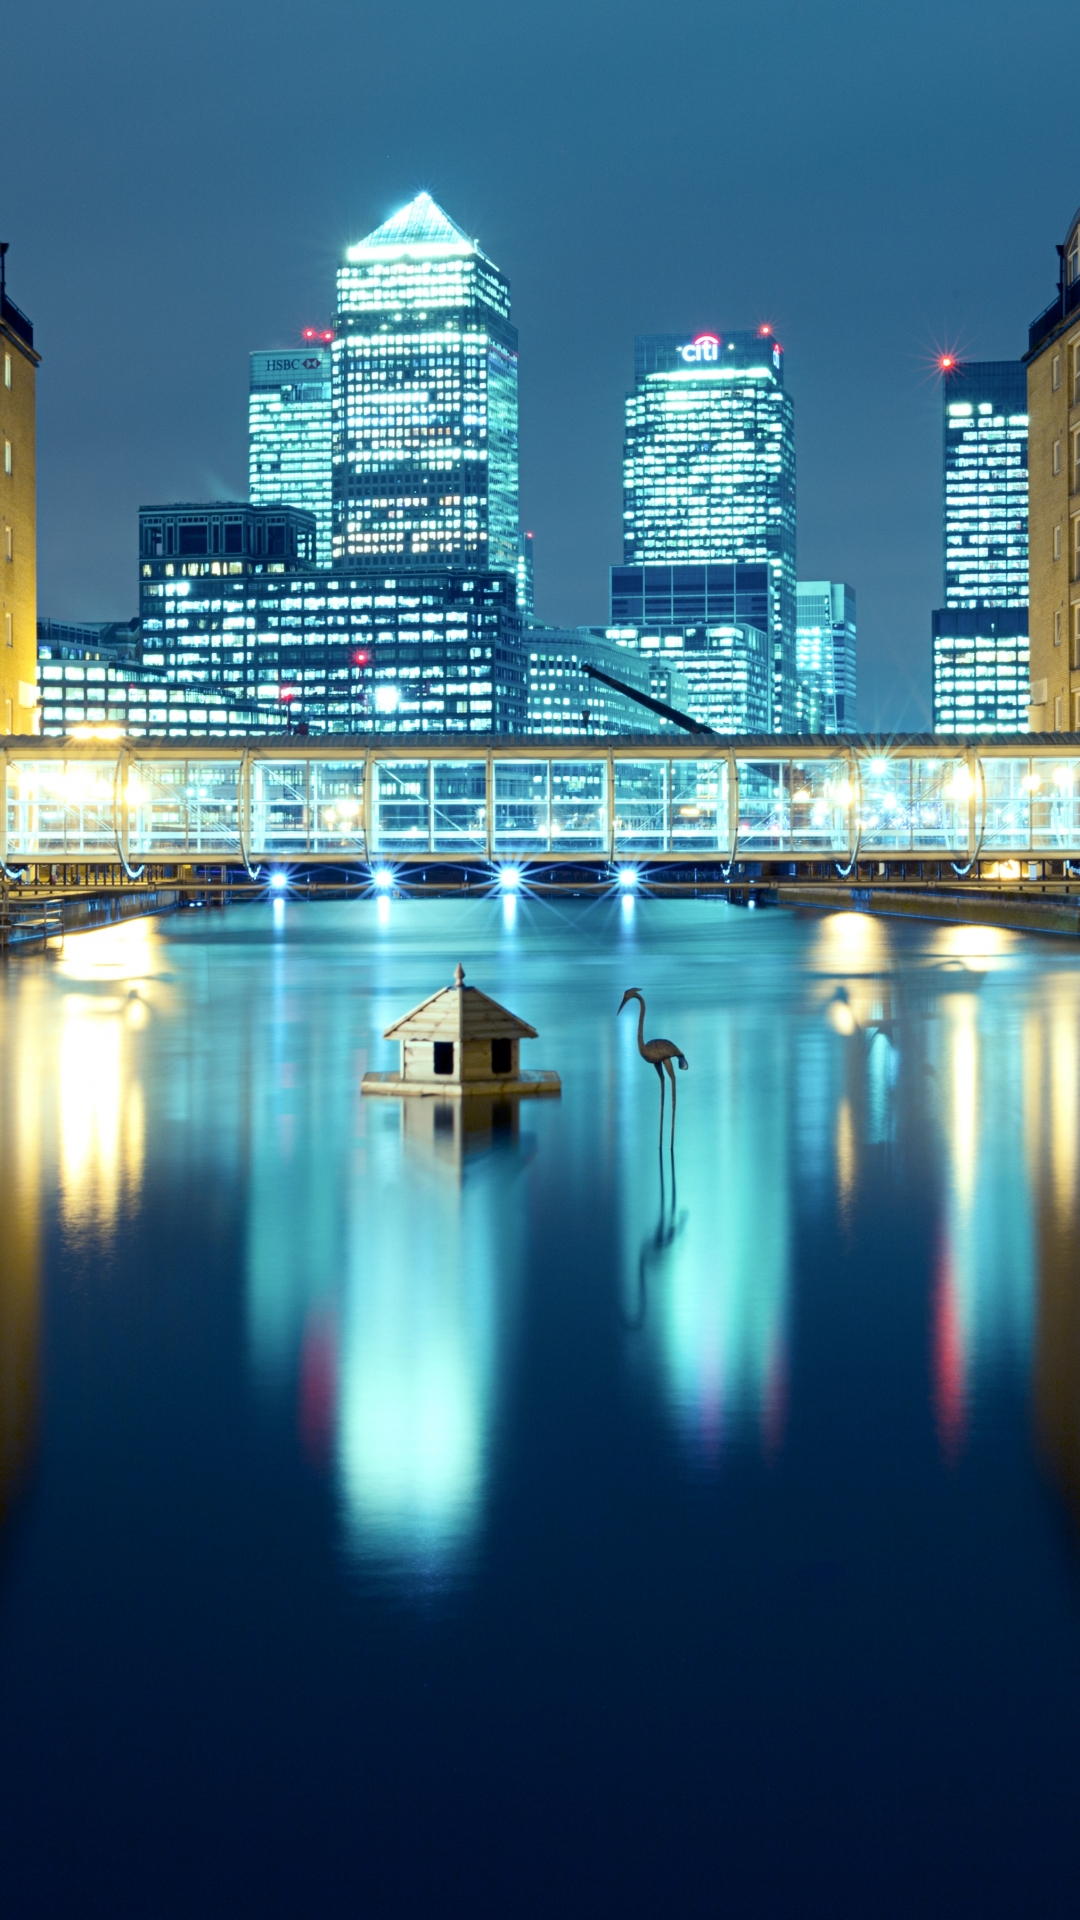 man made, london, wharf, reflection, england, light, building, night, cities